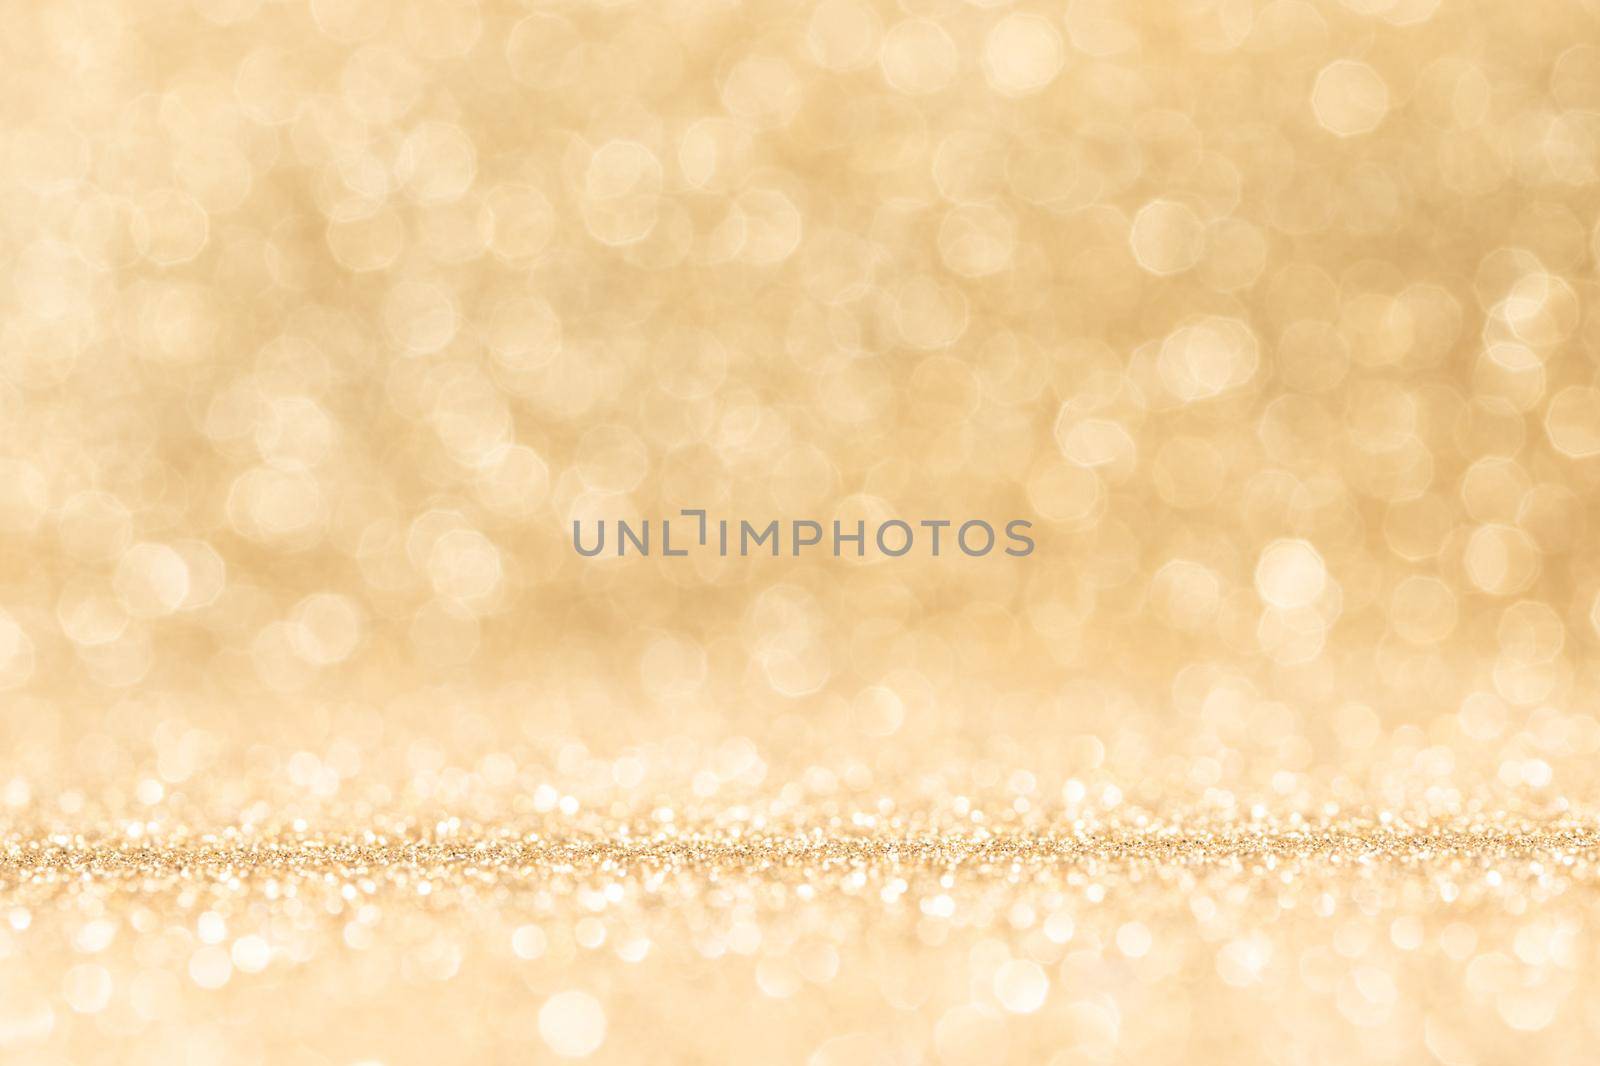 Shiny golden lights background by Yellowj